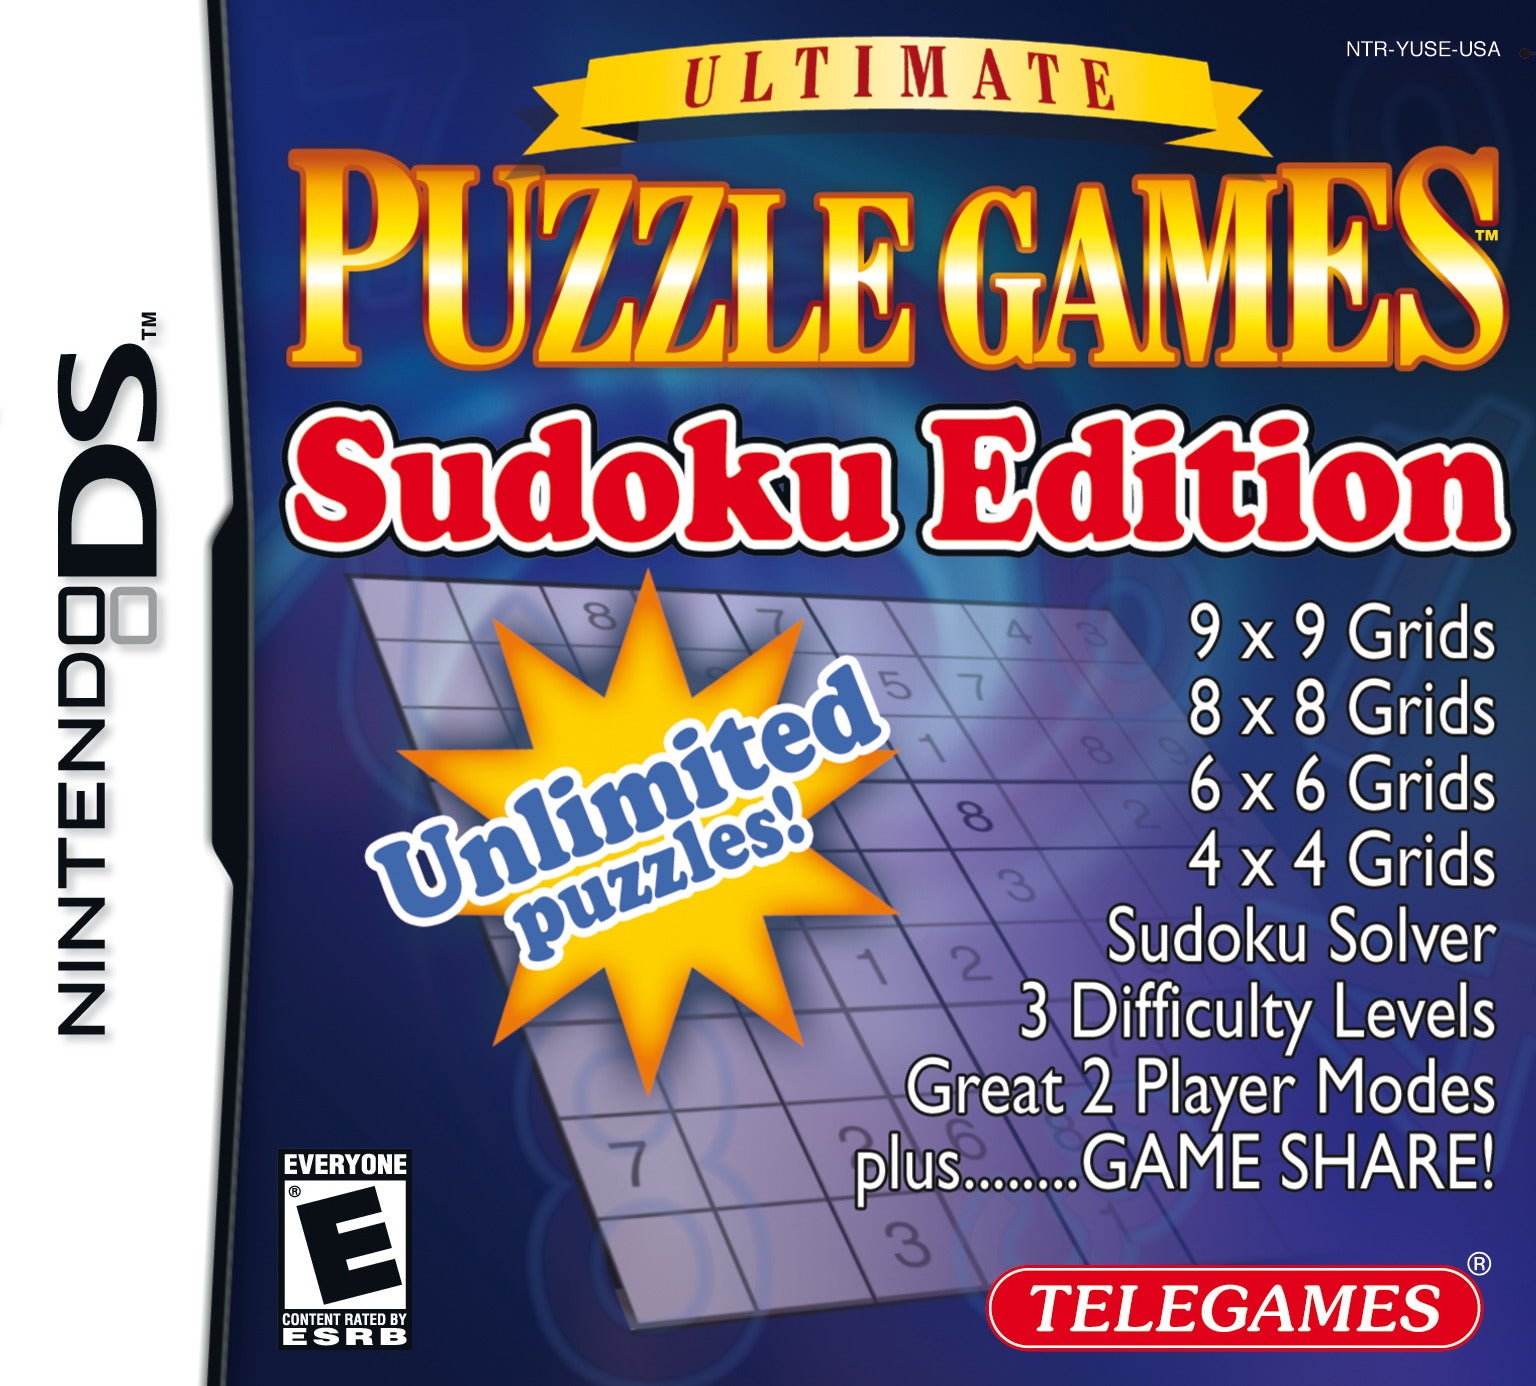 Ultimate Puzzle Games: Sudoku Edition - Nintendo DS Video Games Telegames   